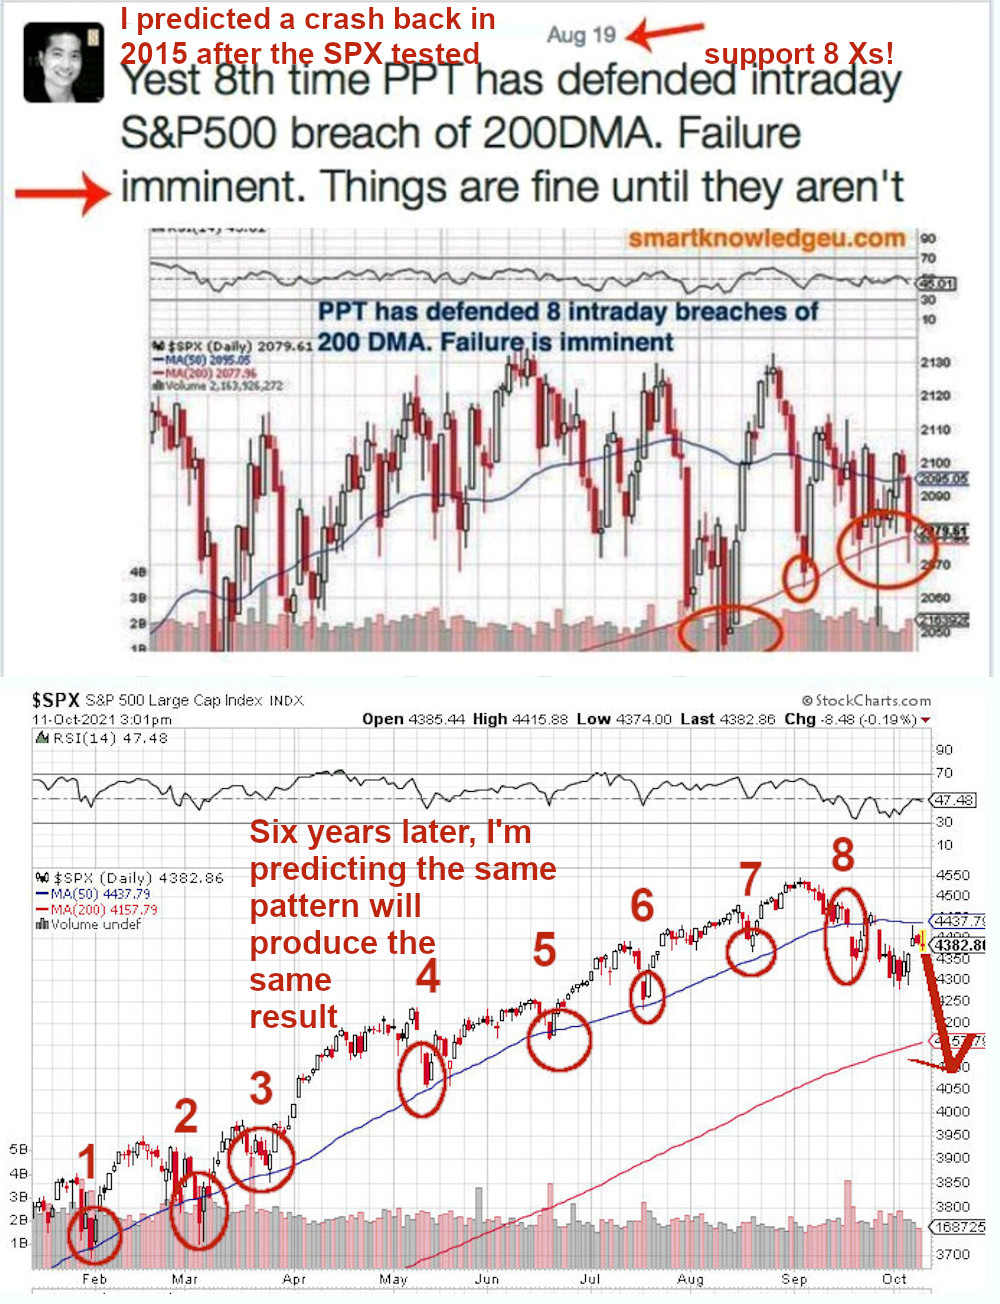 US stock market crash coming?
